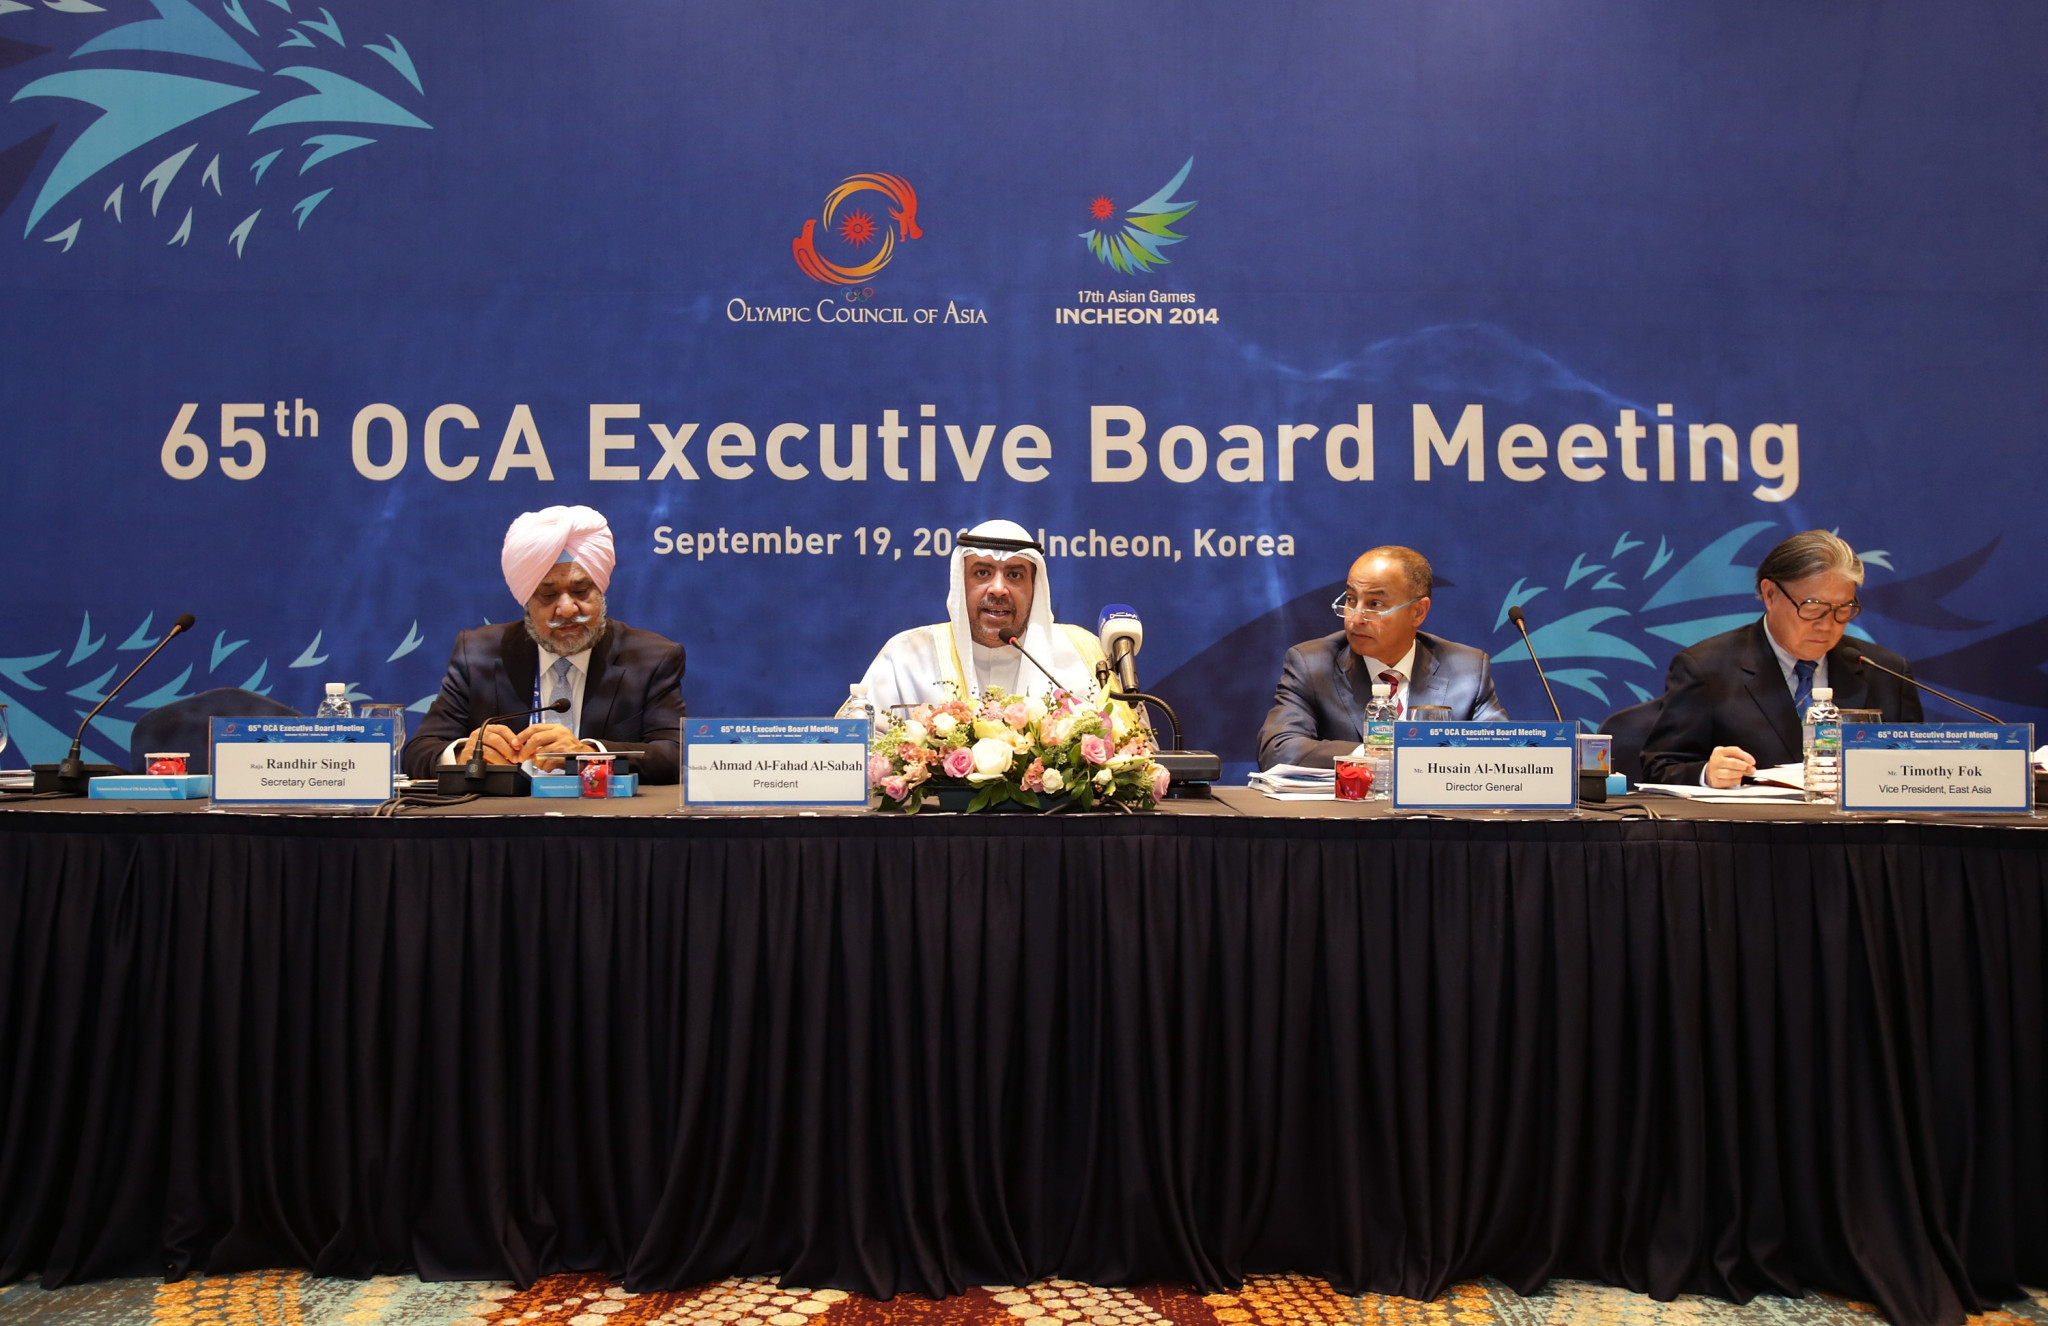 Kuwait may have sponsored Musallam's World Aquatics presidency campaign